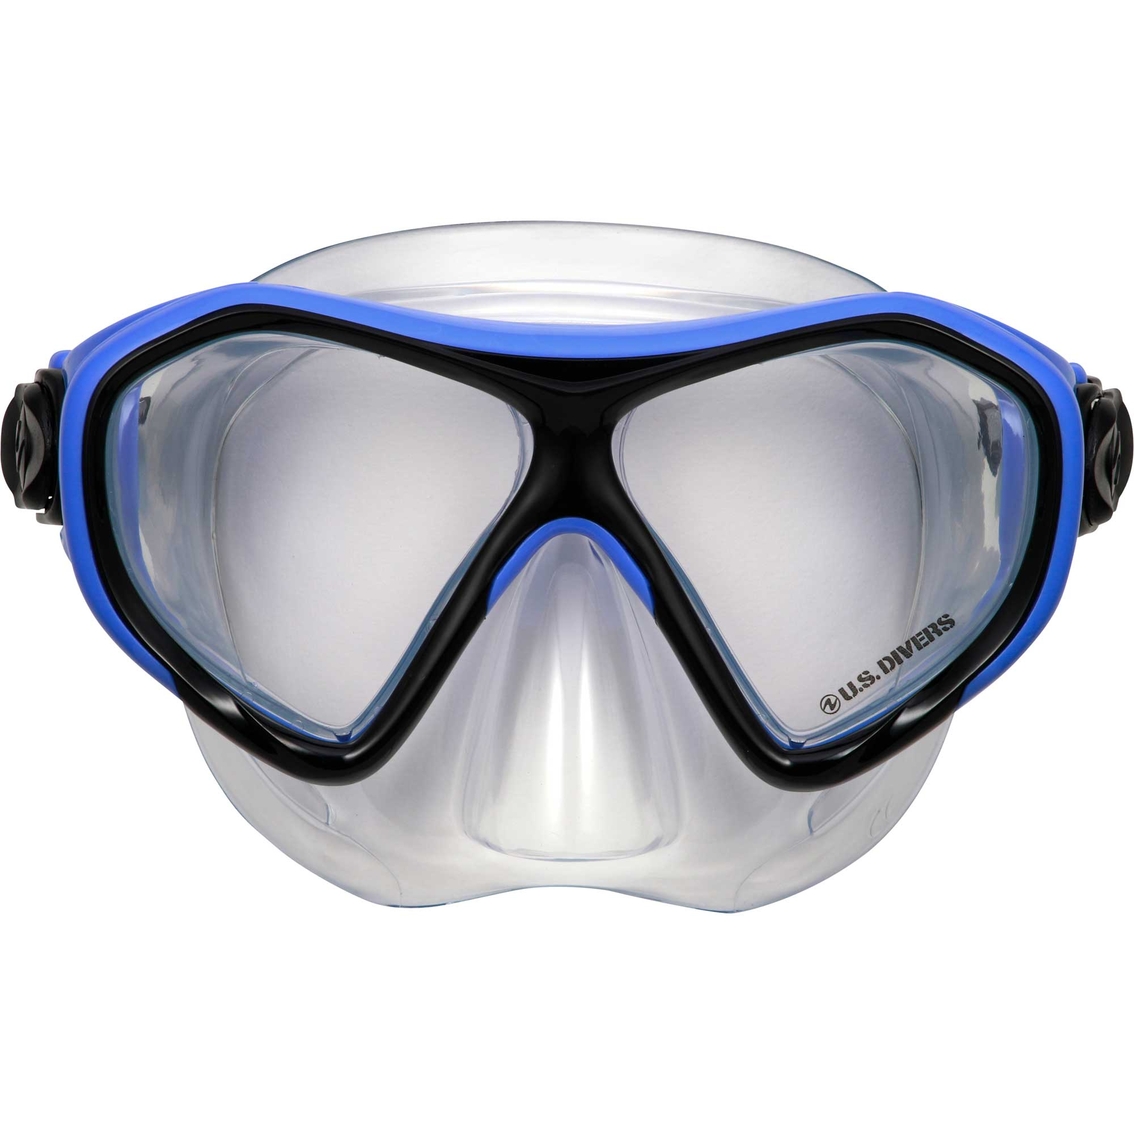 Vega tinted dive / snorkel / spearfishing mask.